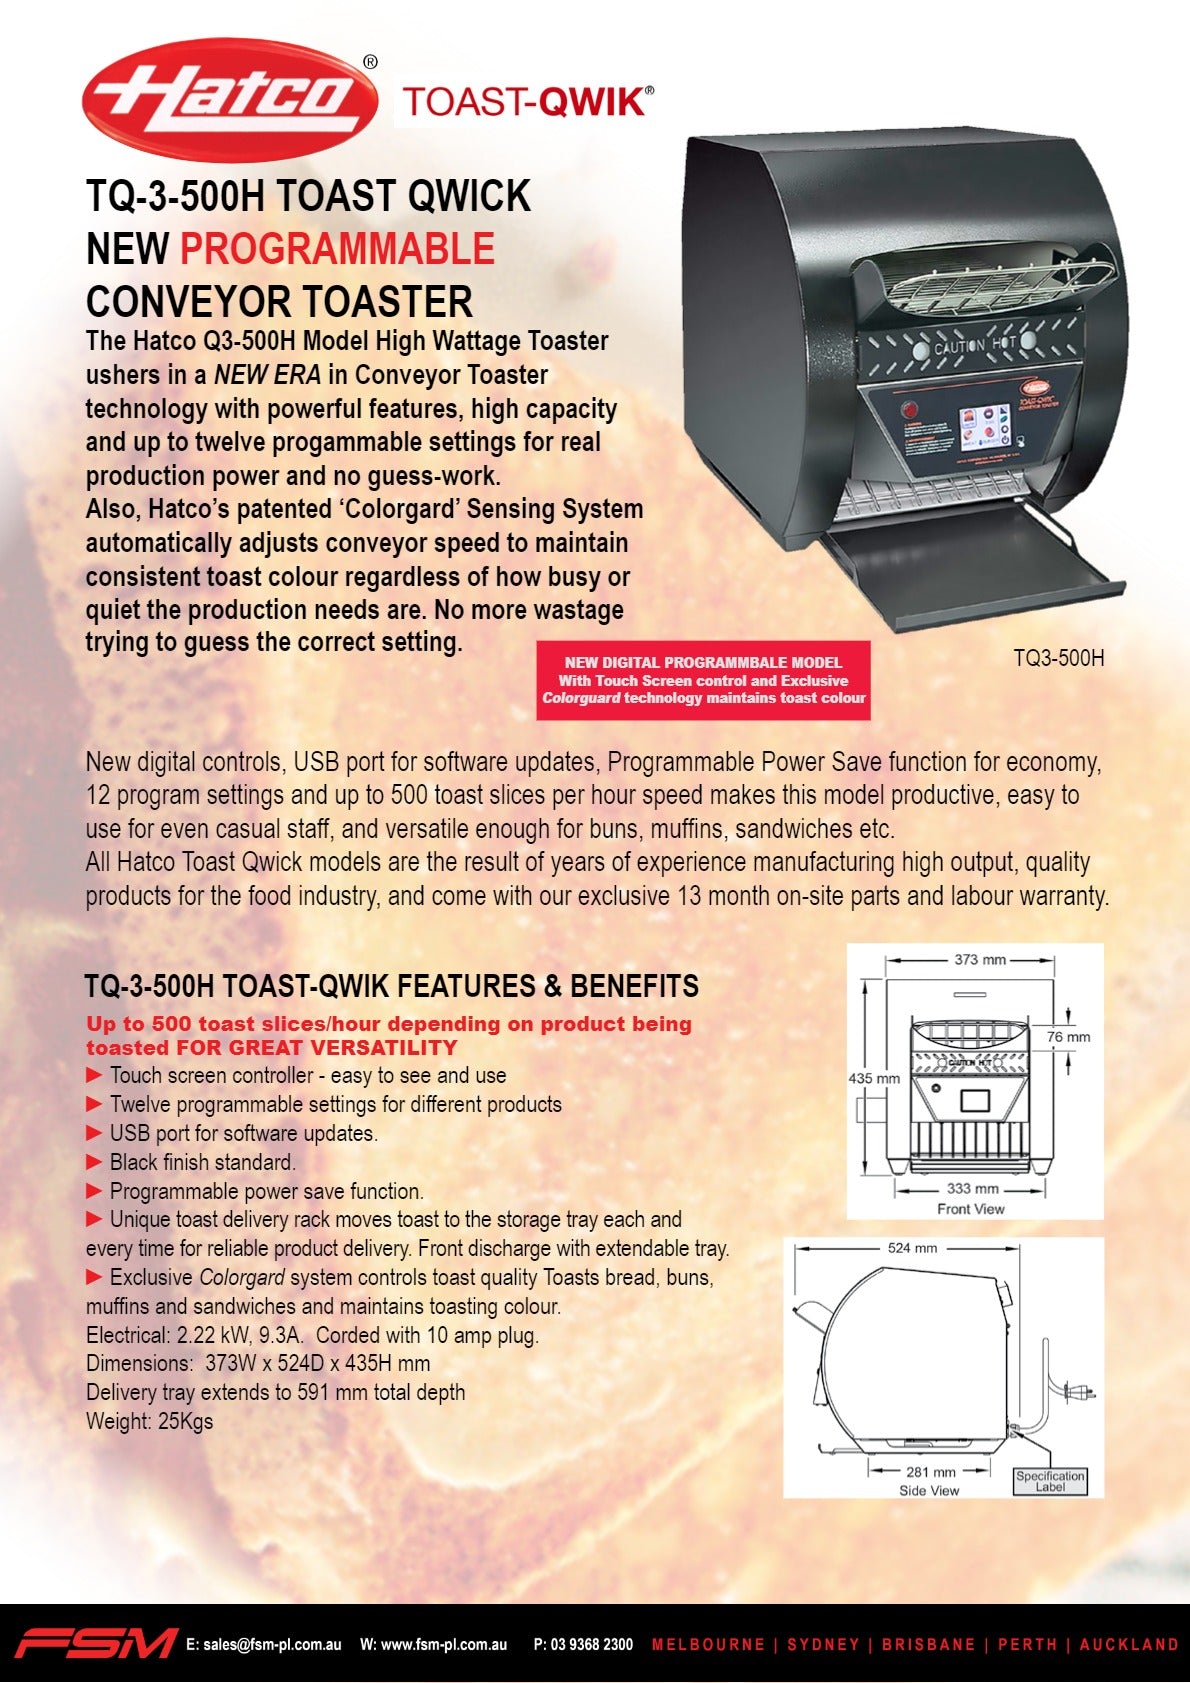 Thumbnail - Hatco Toast-Qwik TQ3-500H - Conveyor Toaster